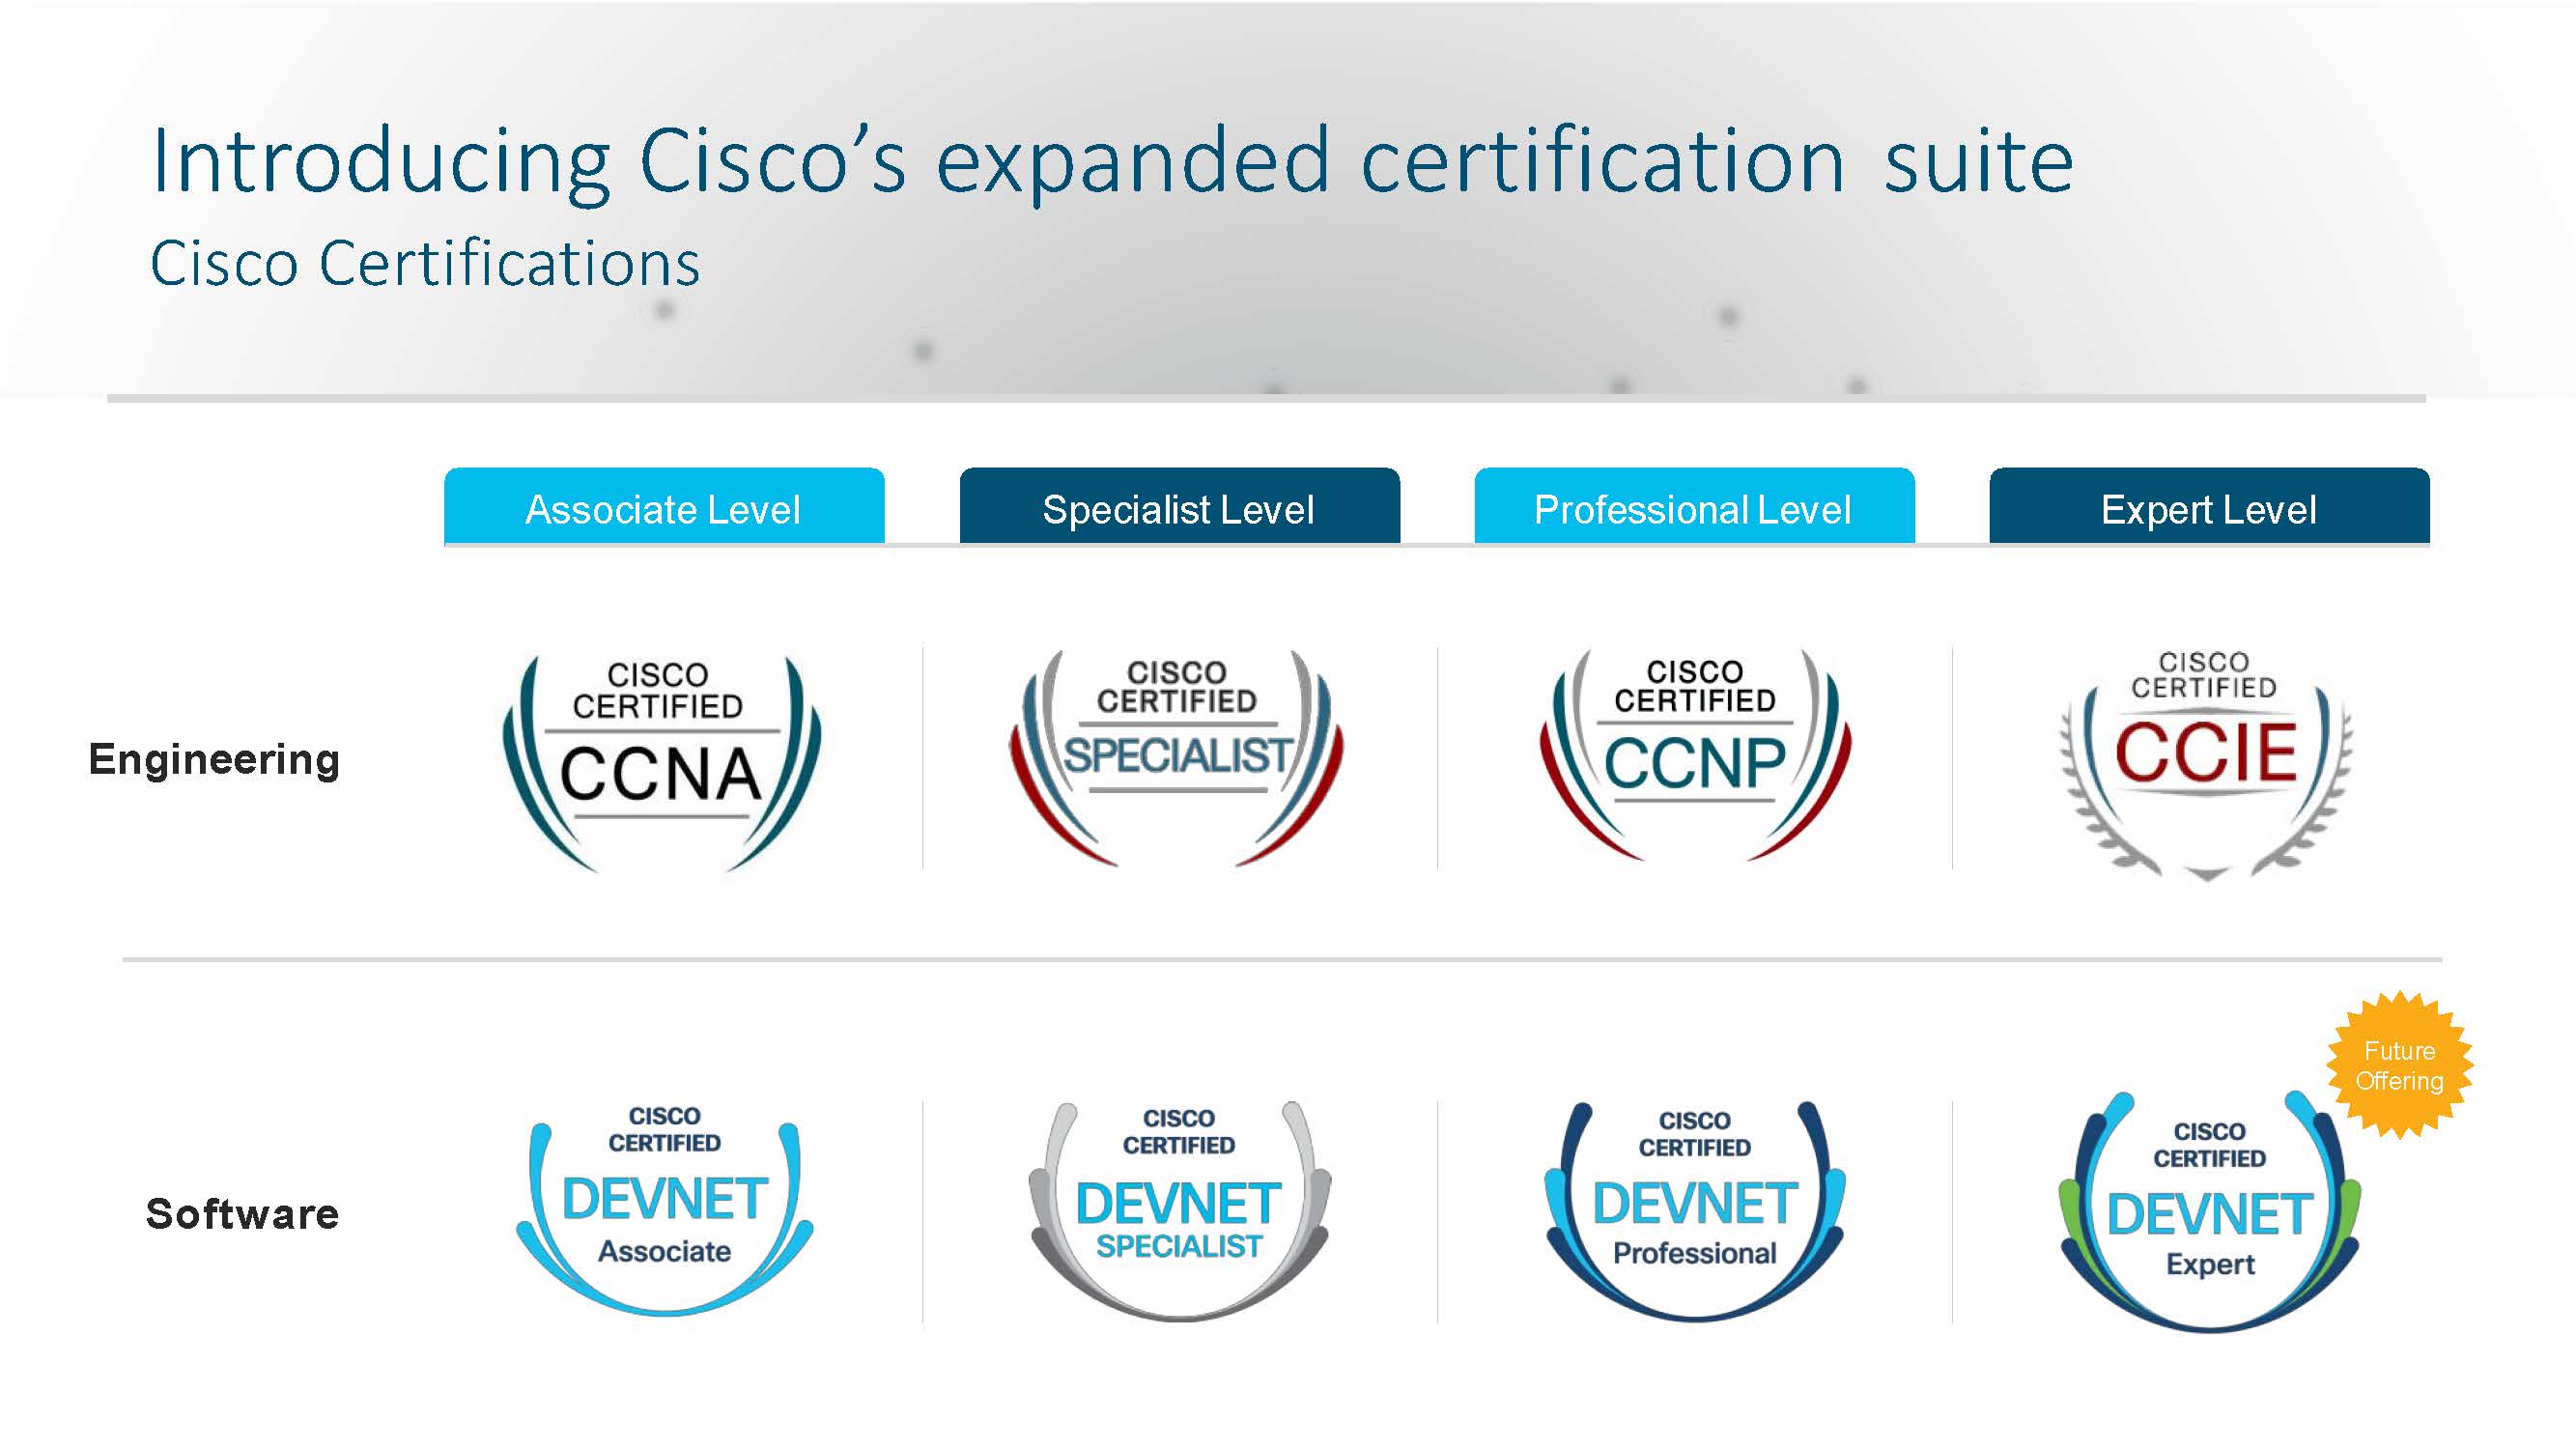 Cisco vpn security specialist certification openvpn redirect all traffic windows